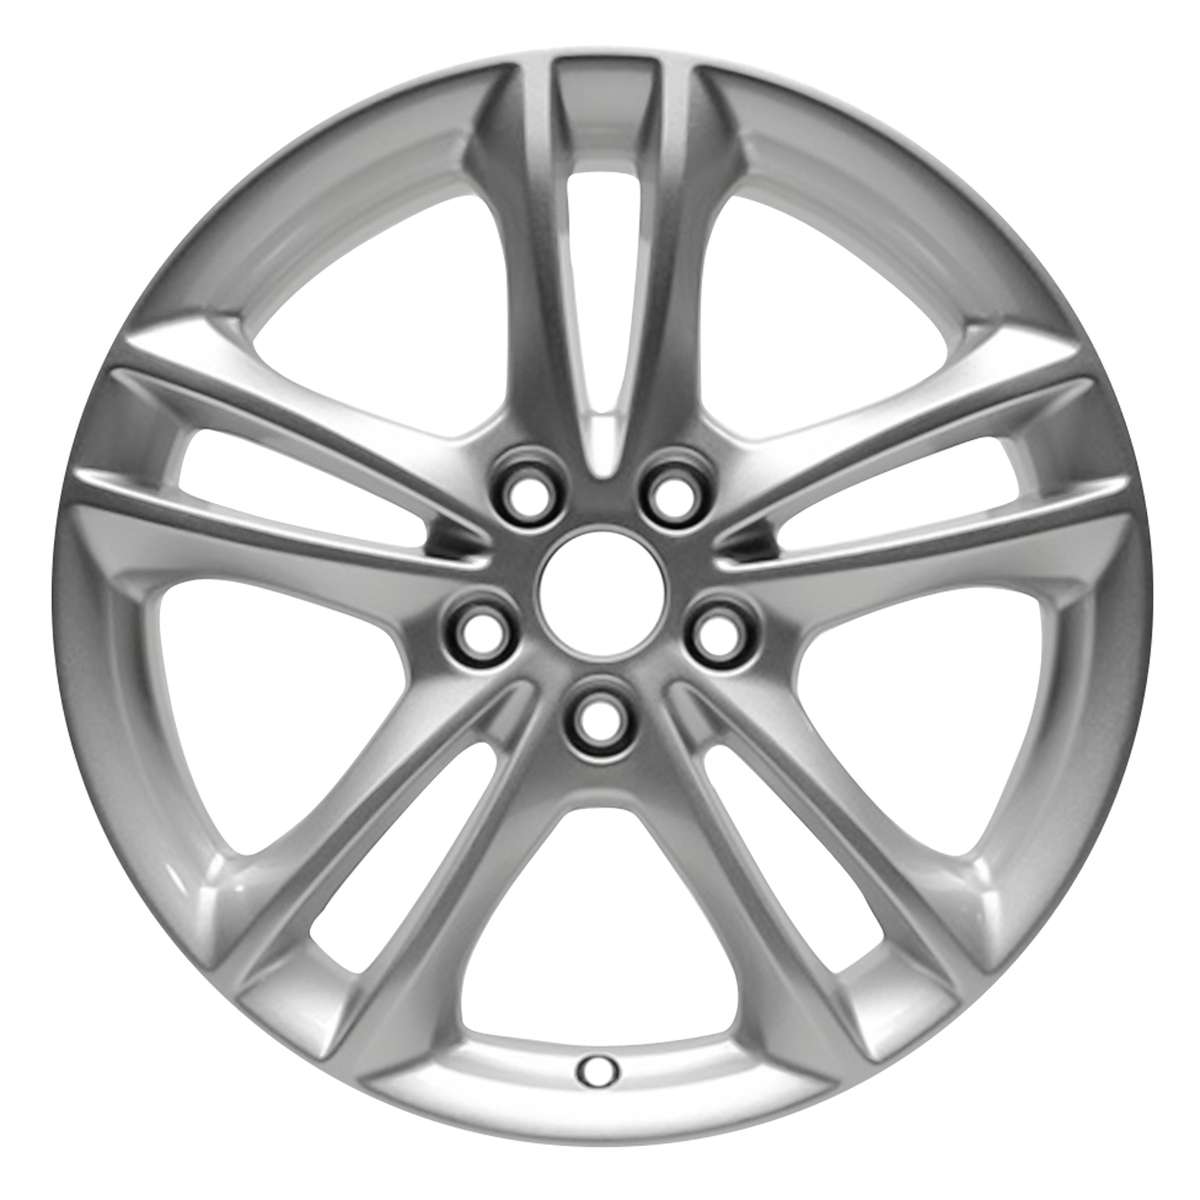 2018 Ford Fusion New 17" Replacement Wheel Rim RW3984SB